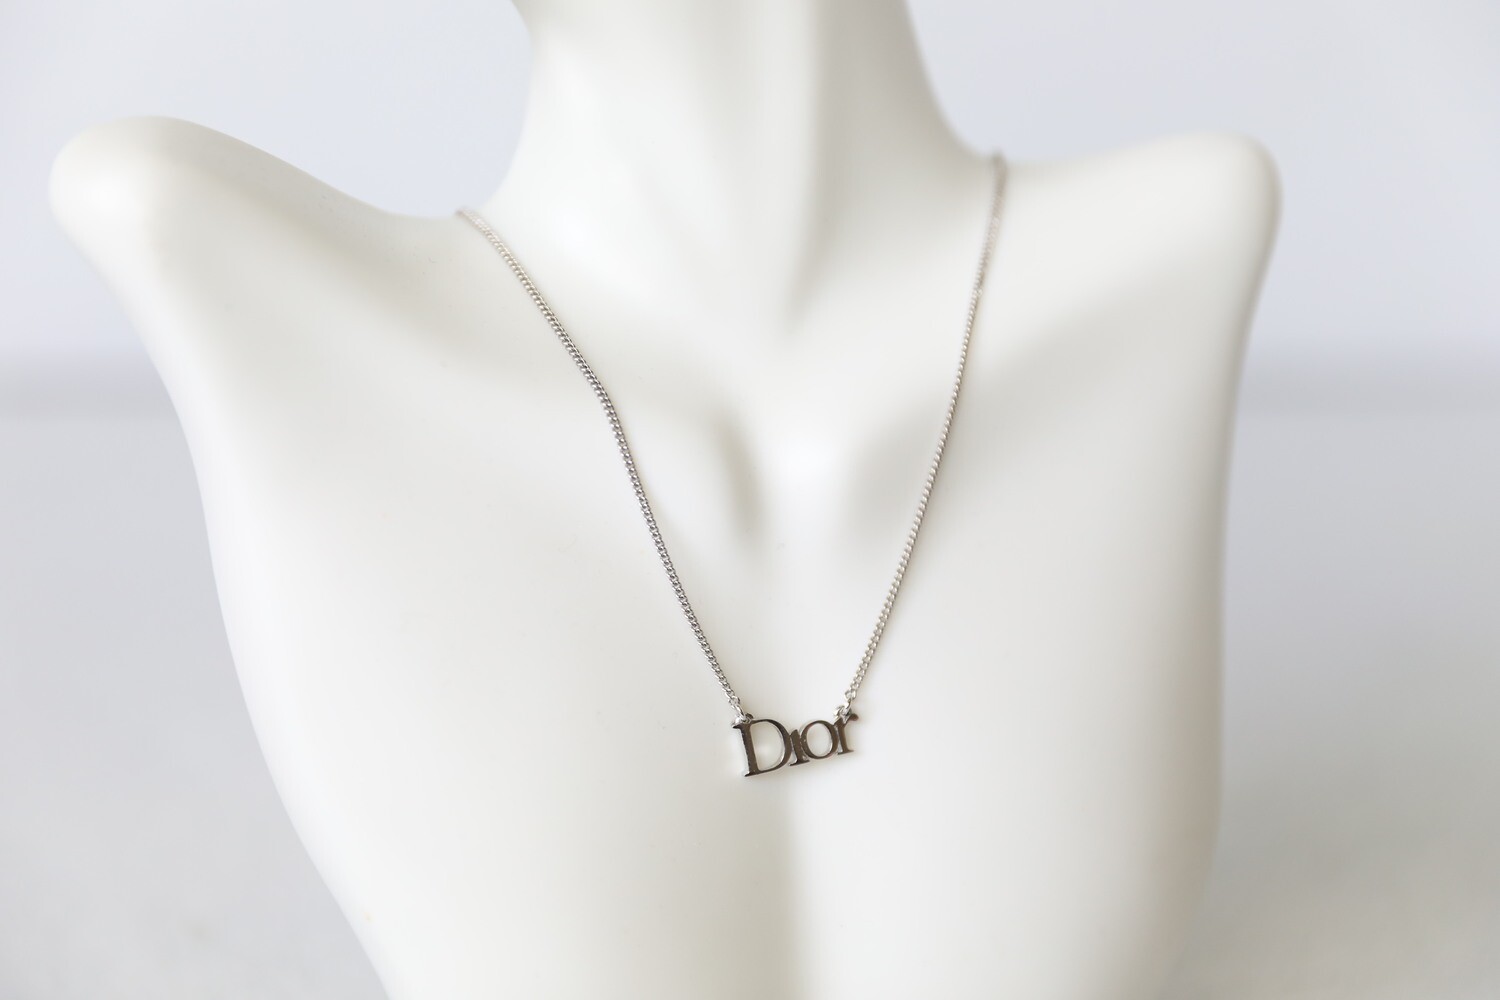 Christian Dior Necklace, Silver Tone, Preowned in Dustbag WA001